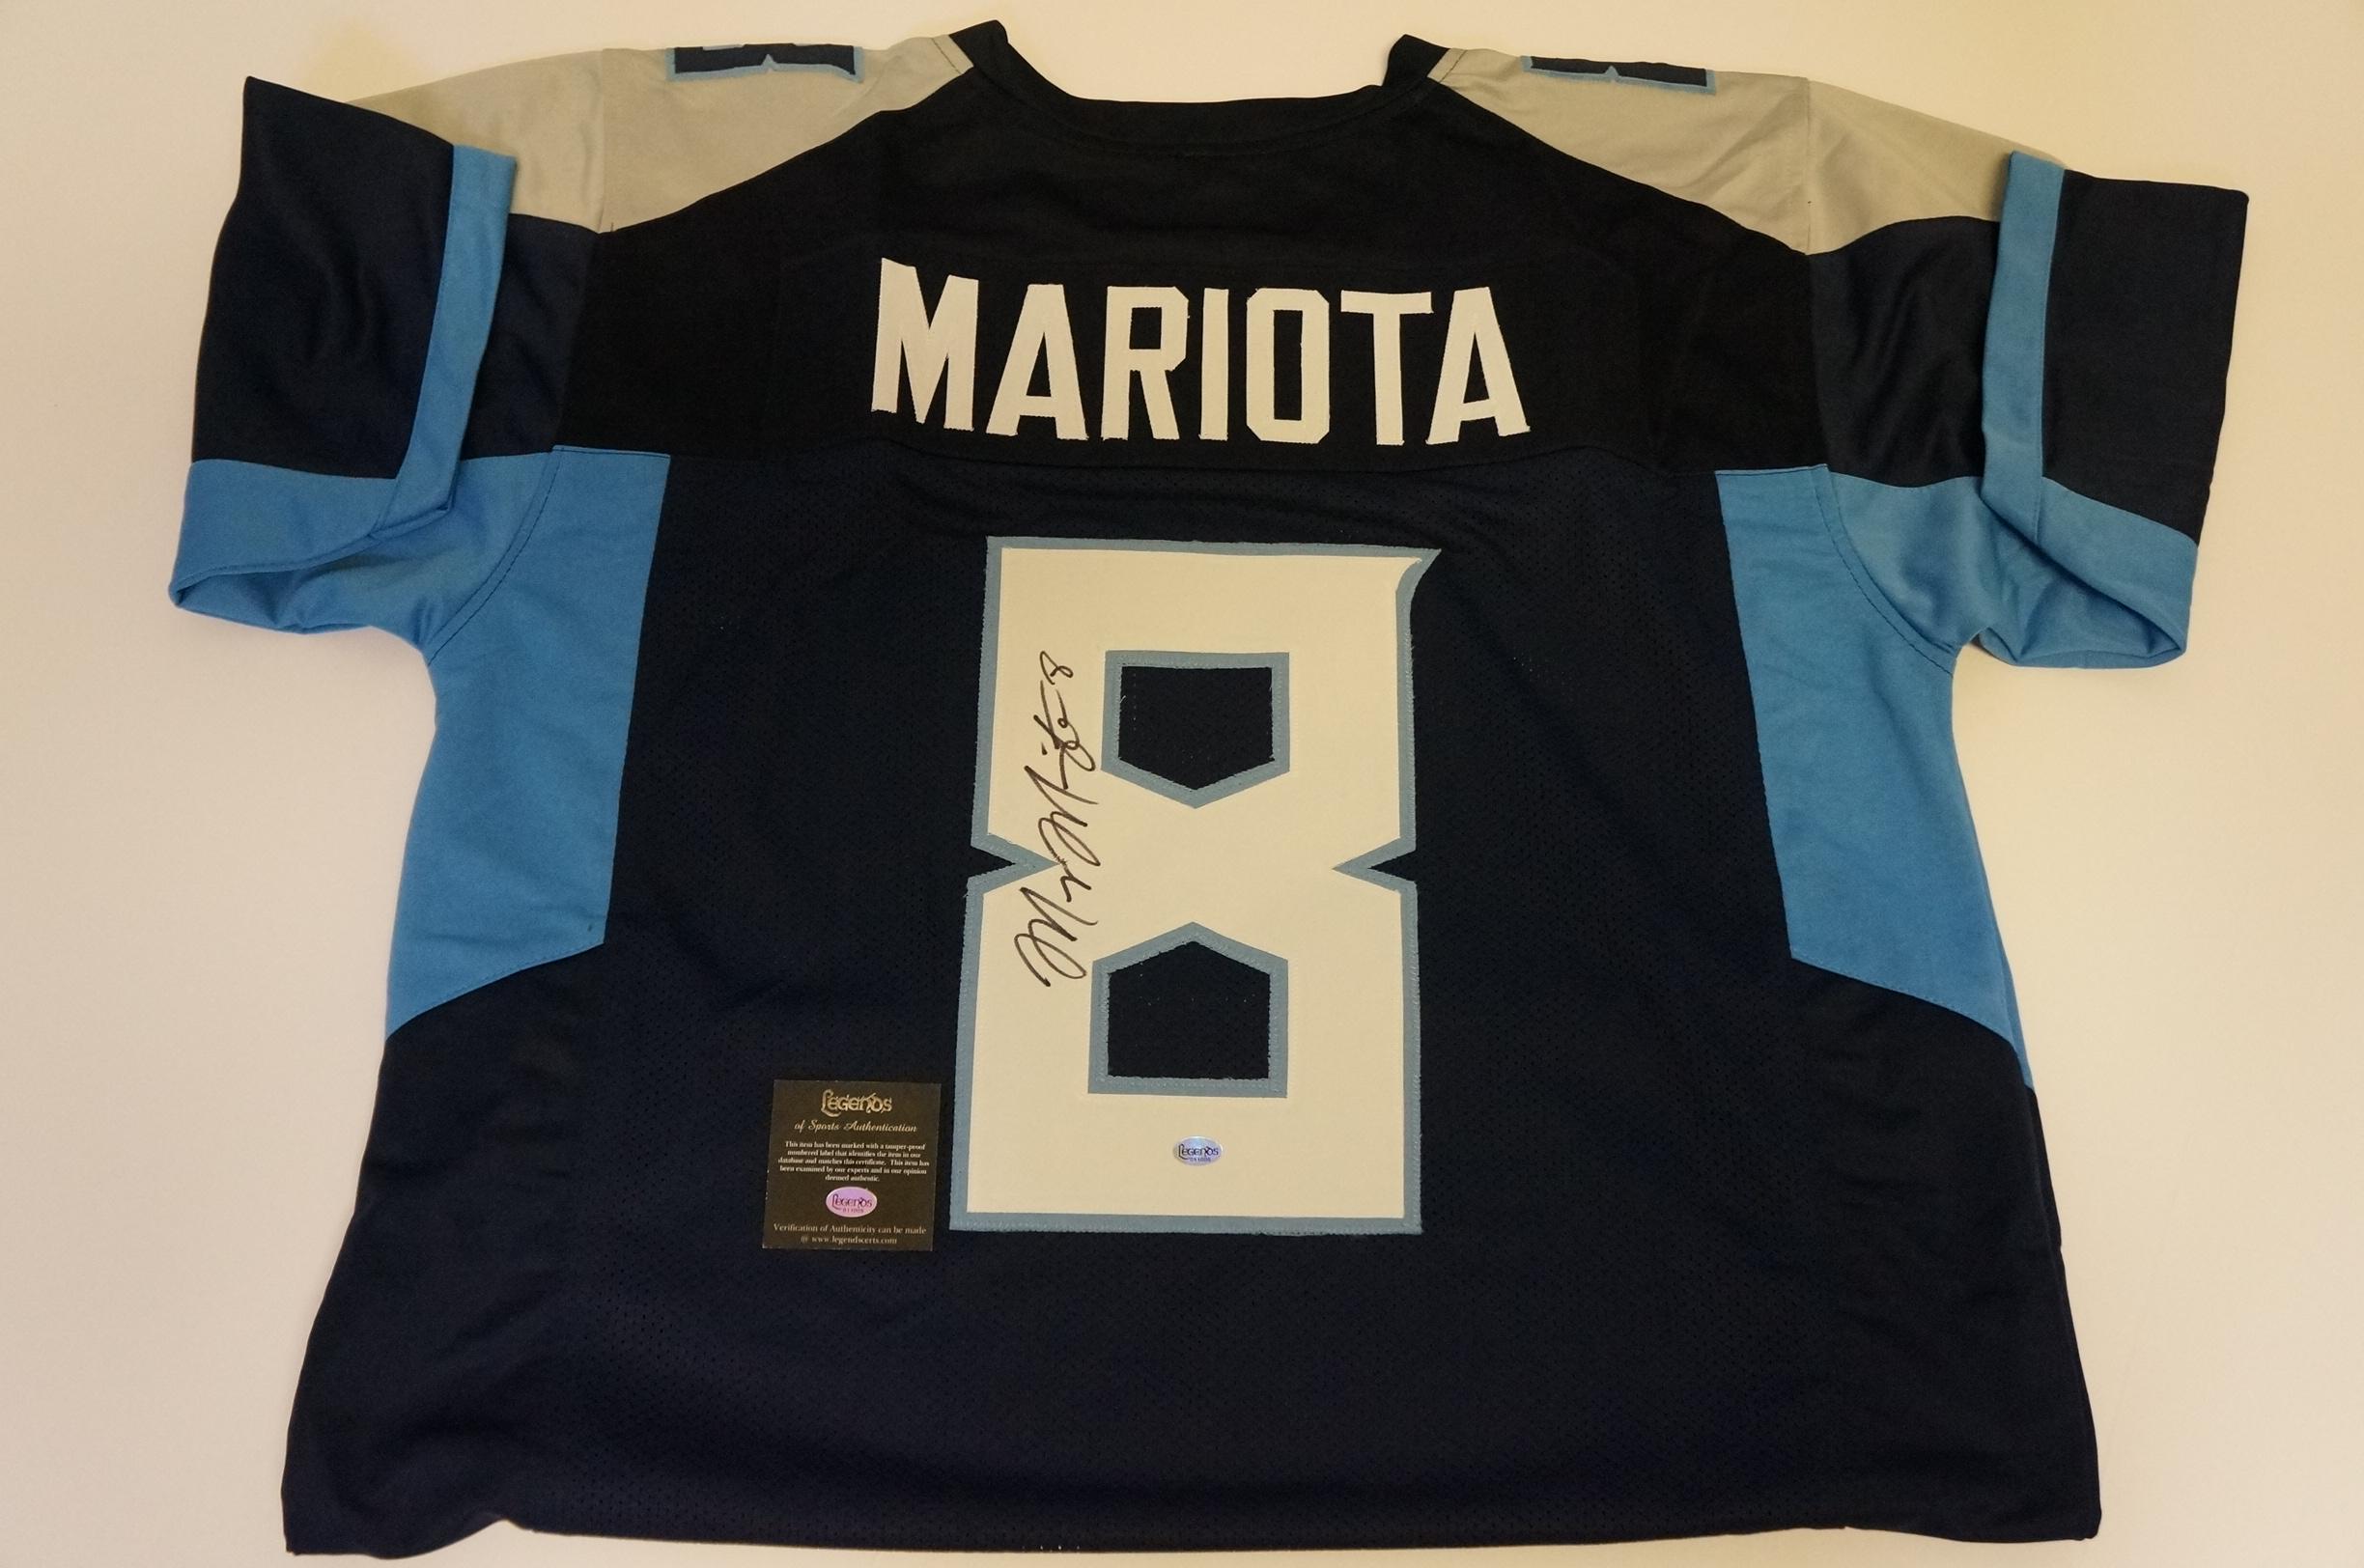 Marcus Mariota Tennessee Titans signed Football Jersey.